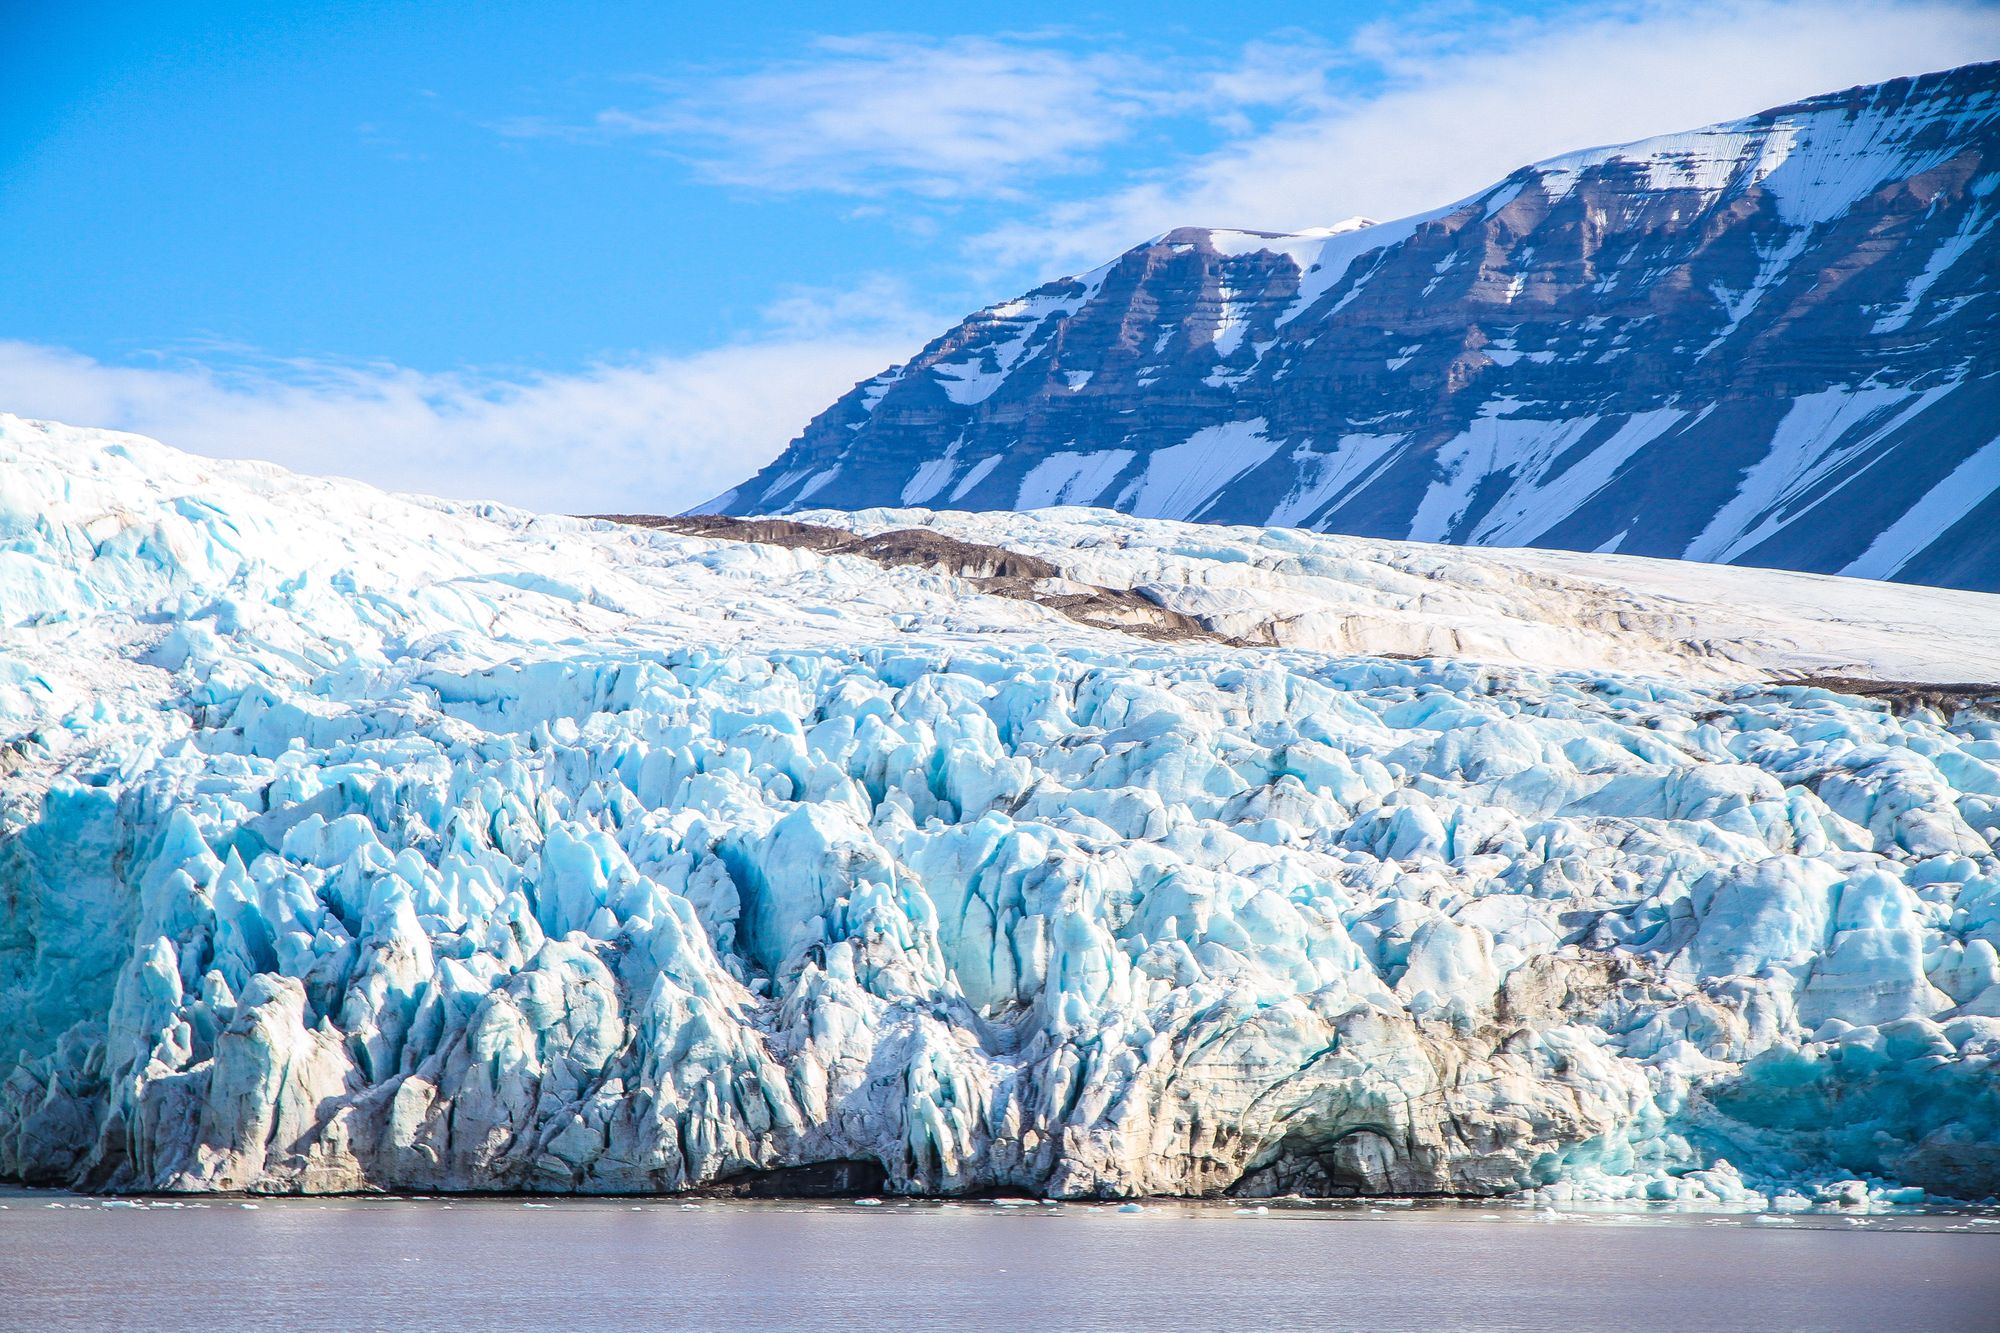 The Svalbard Ice Shelf. Photo: Vince Gx